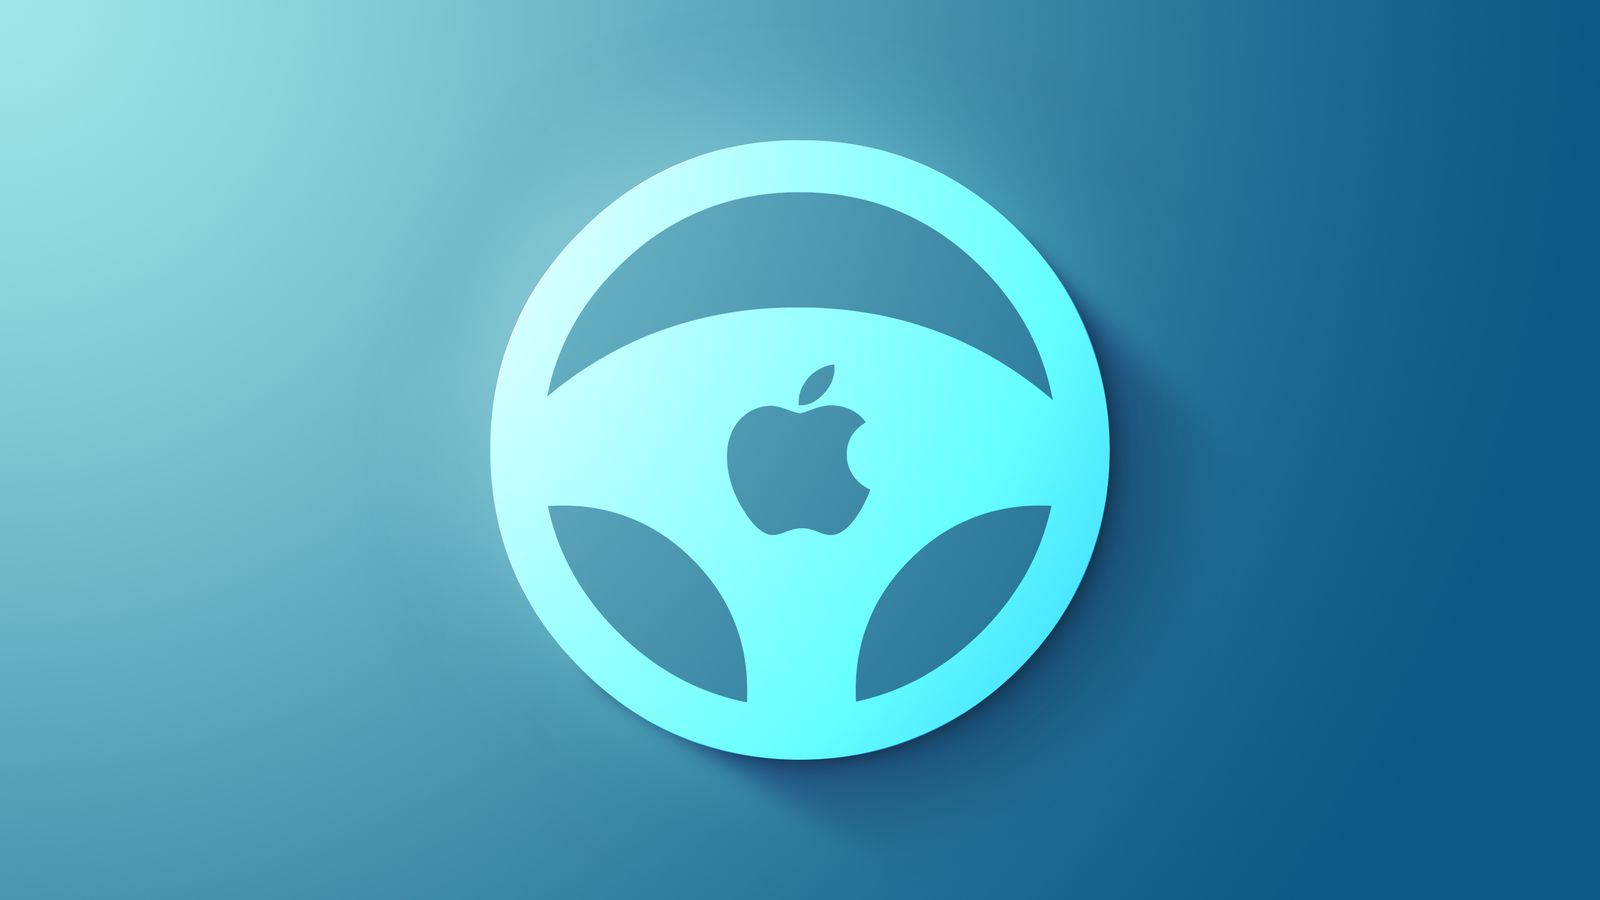 Apple-car-wheel-icon-feature-blue.jpg